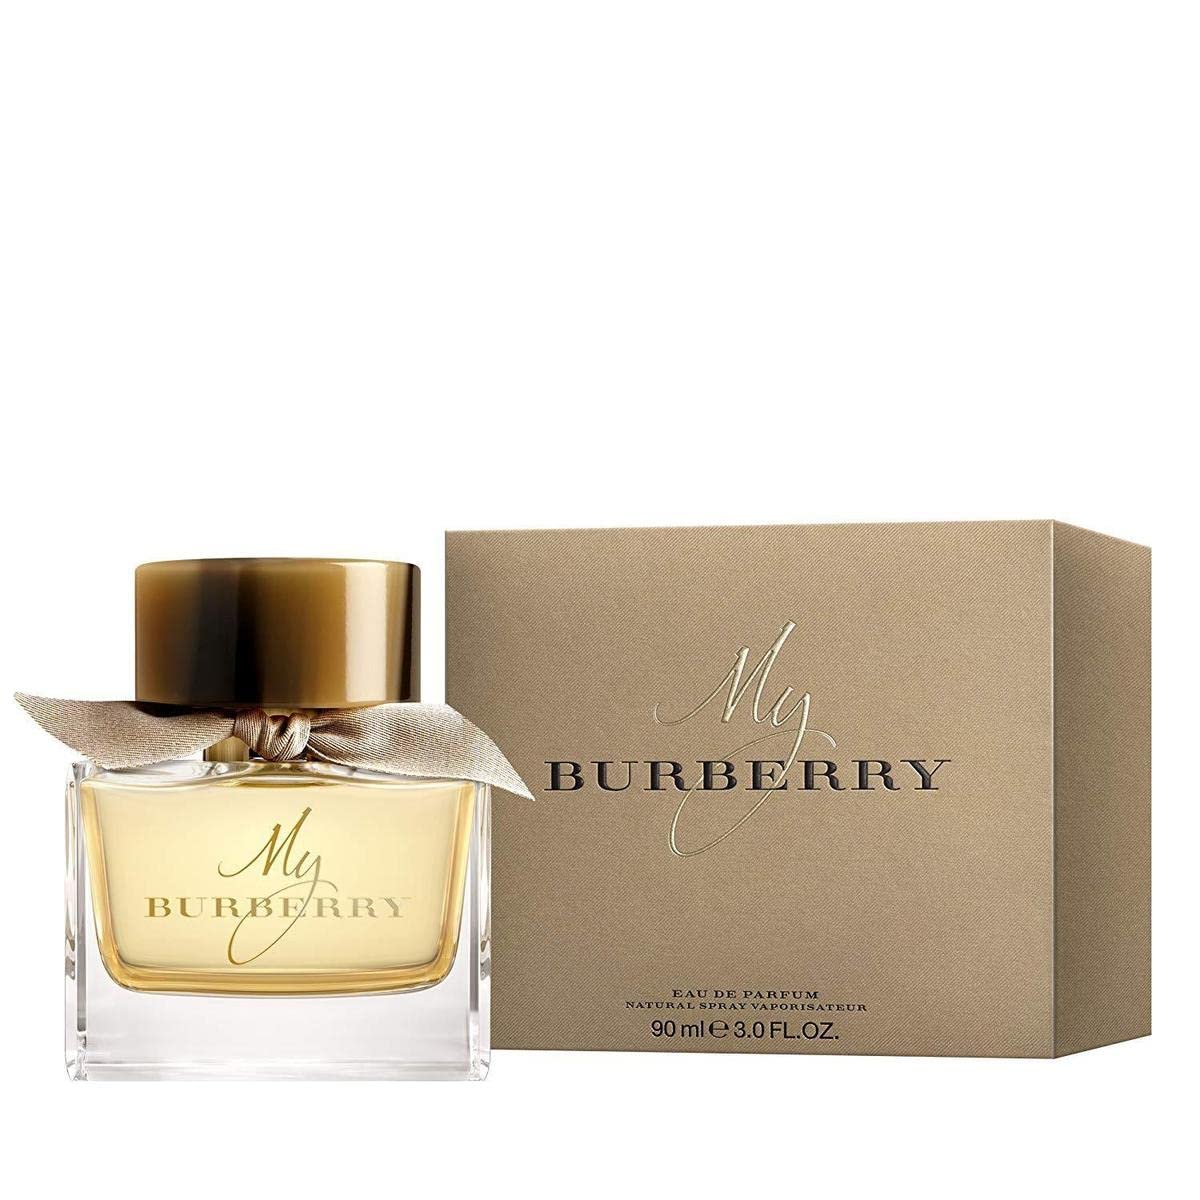 Arriba 31+ imagen buy my burberry perfume